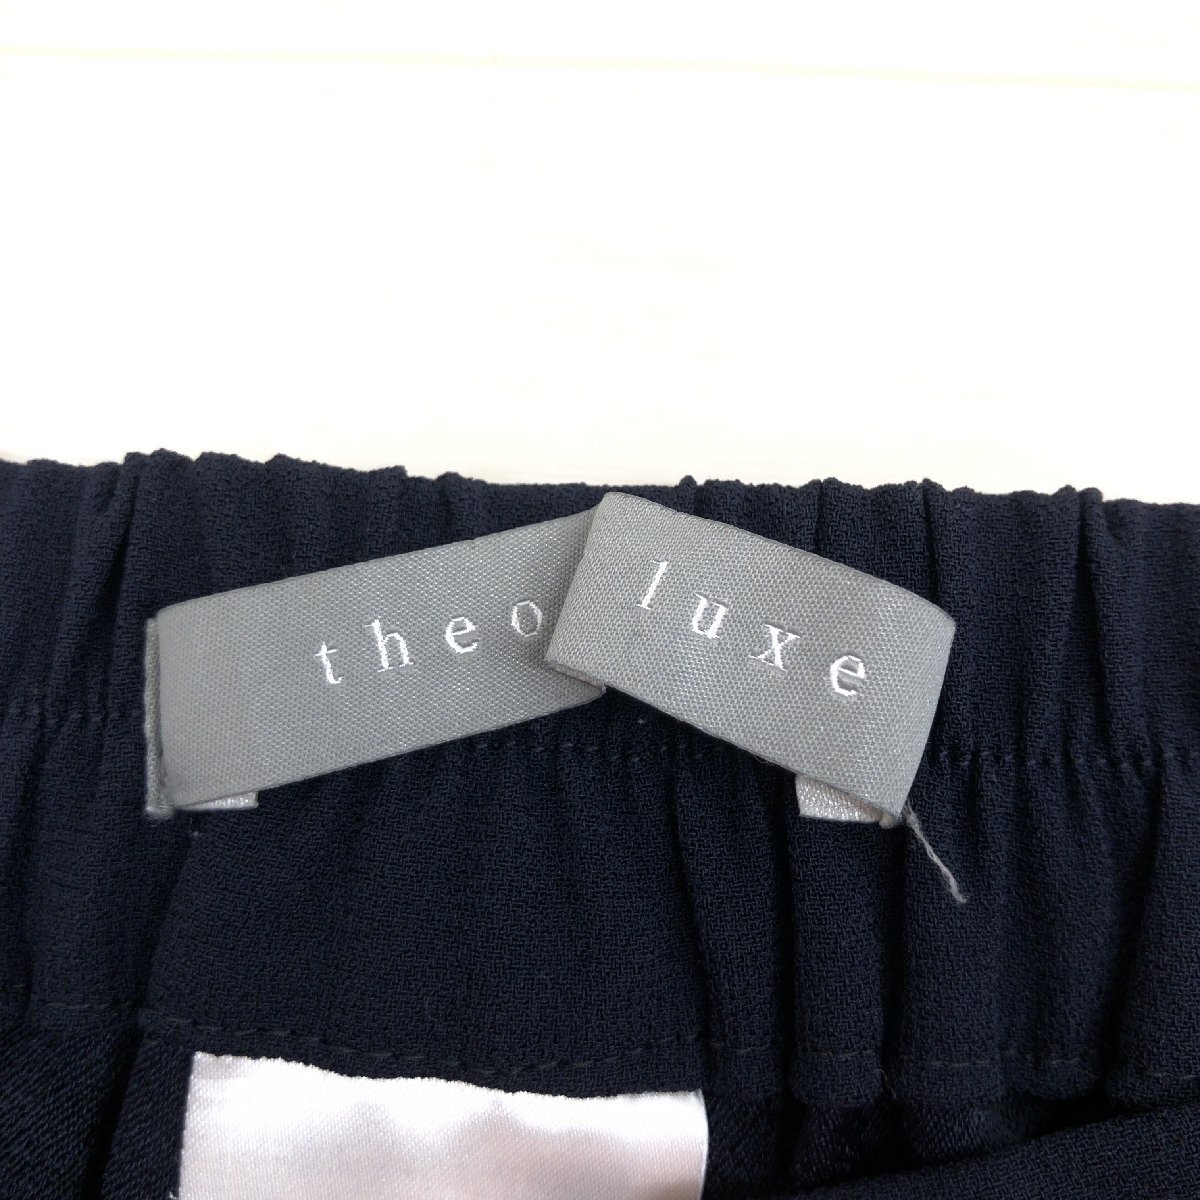 Theory luxe セオリーリュクス ワイド ガウチョパンツ 34 濃紺 ネイビー 日本製 ワイドパンツ イージーパンツ スカーチョ レディースの画像3